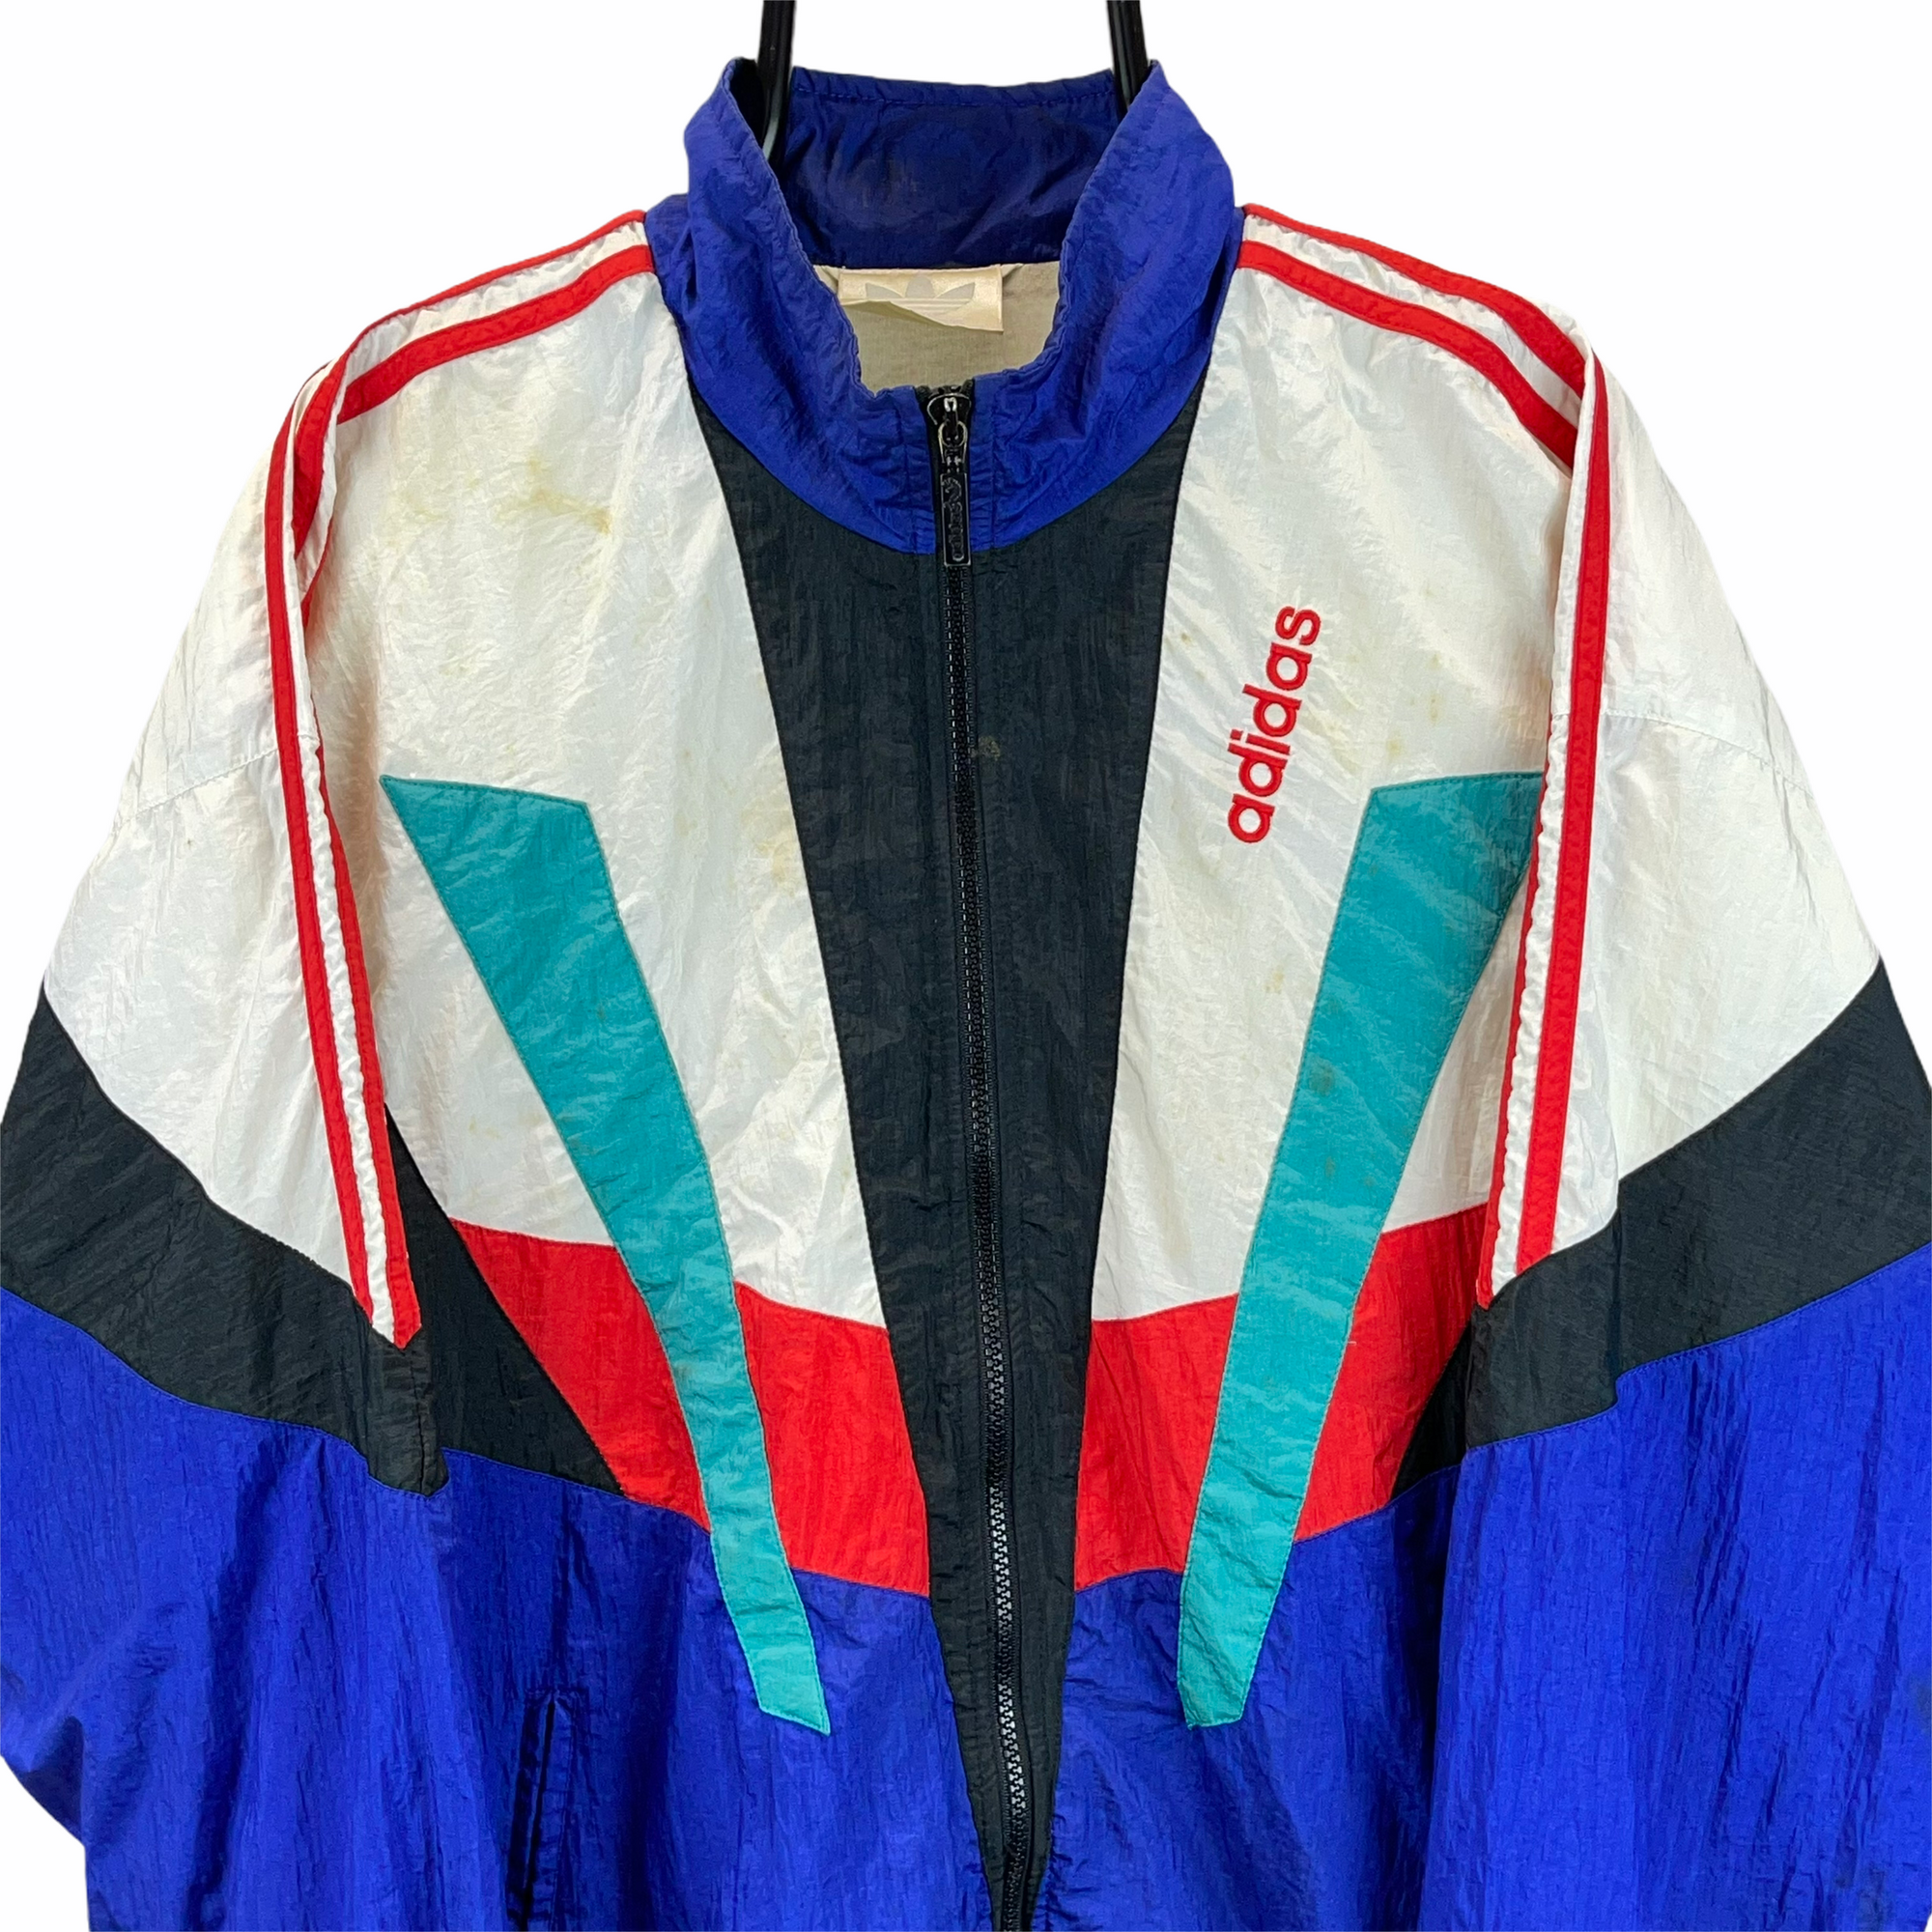 Vintage 90s Adidas Track Jacket in White, Blue & green - Men's Medium/Women's Large